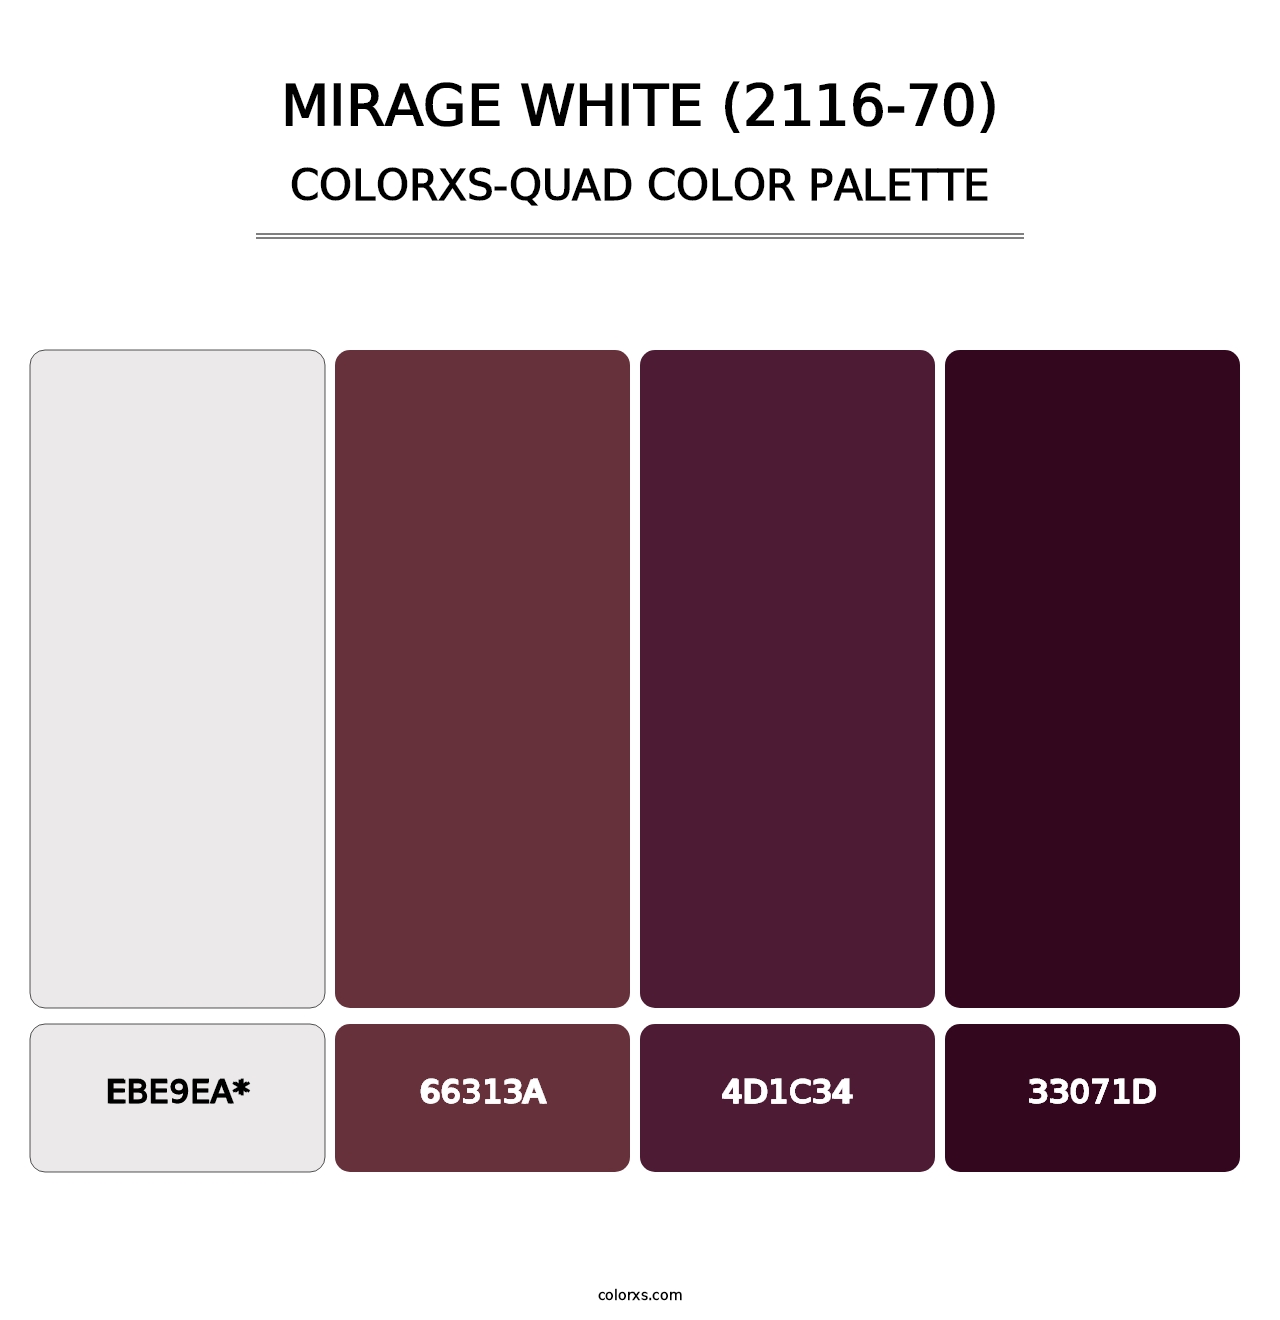 Mirage White (2116-70) - Colorxs Quad Palette